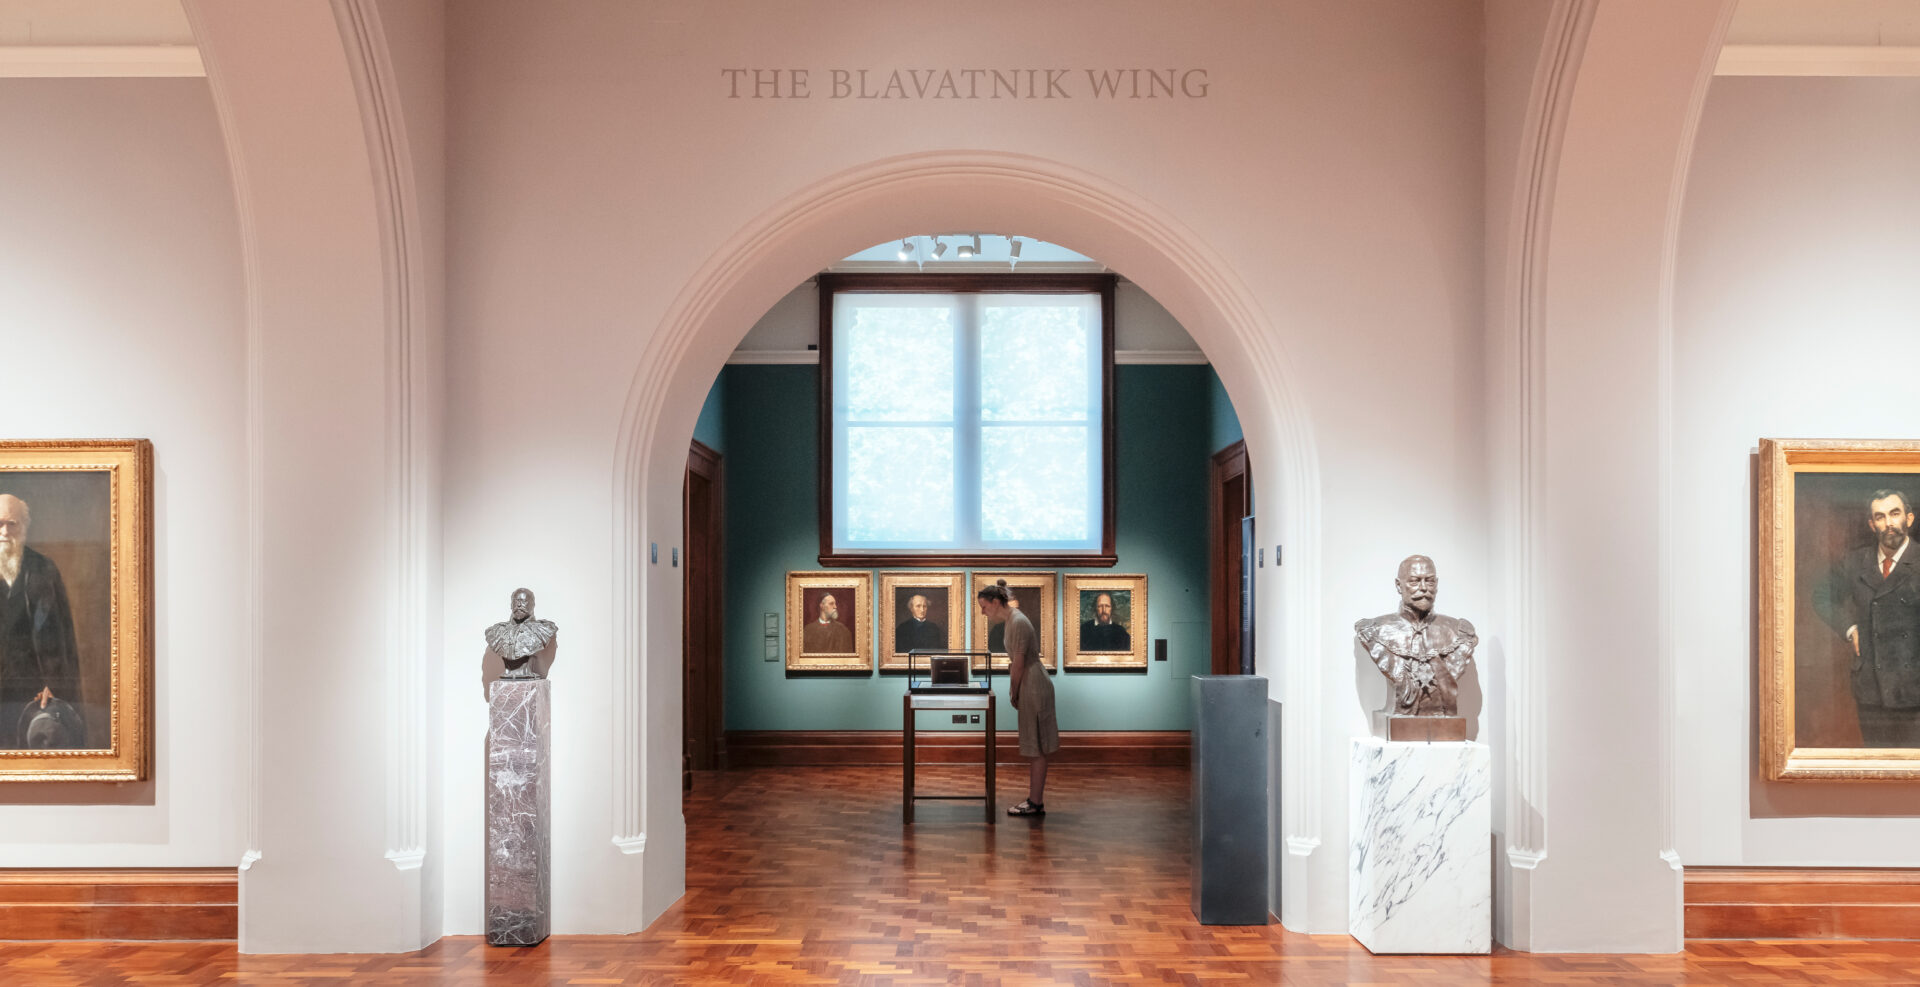 The-Blavatnik-Wing-at-the-National-Portrait-Gallery,-London.-Photo-by-Jim-Stephenson_resized